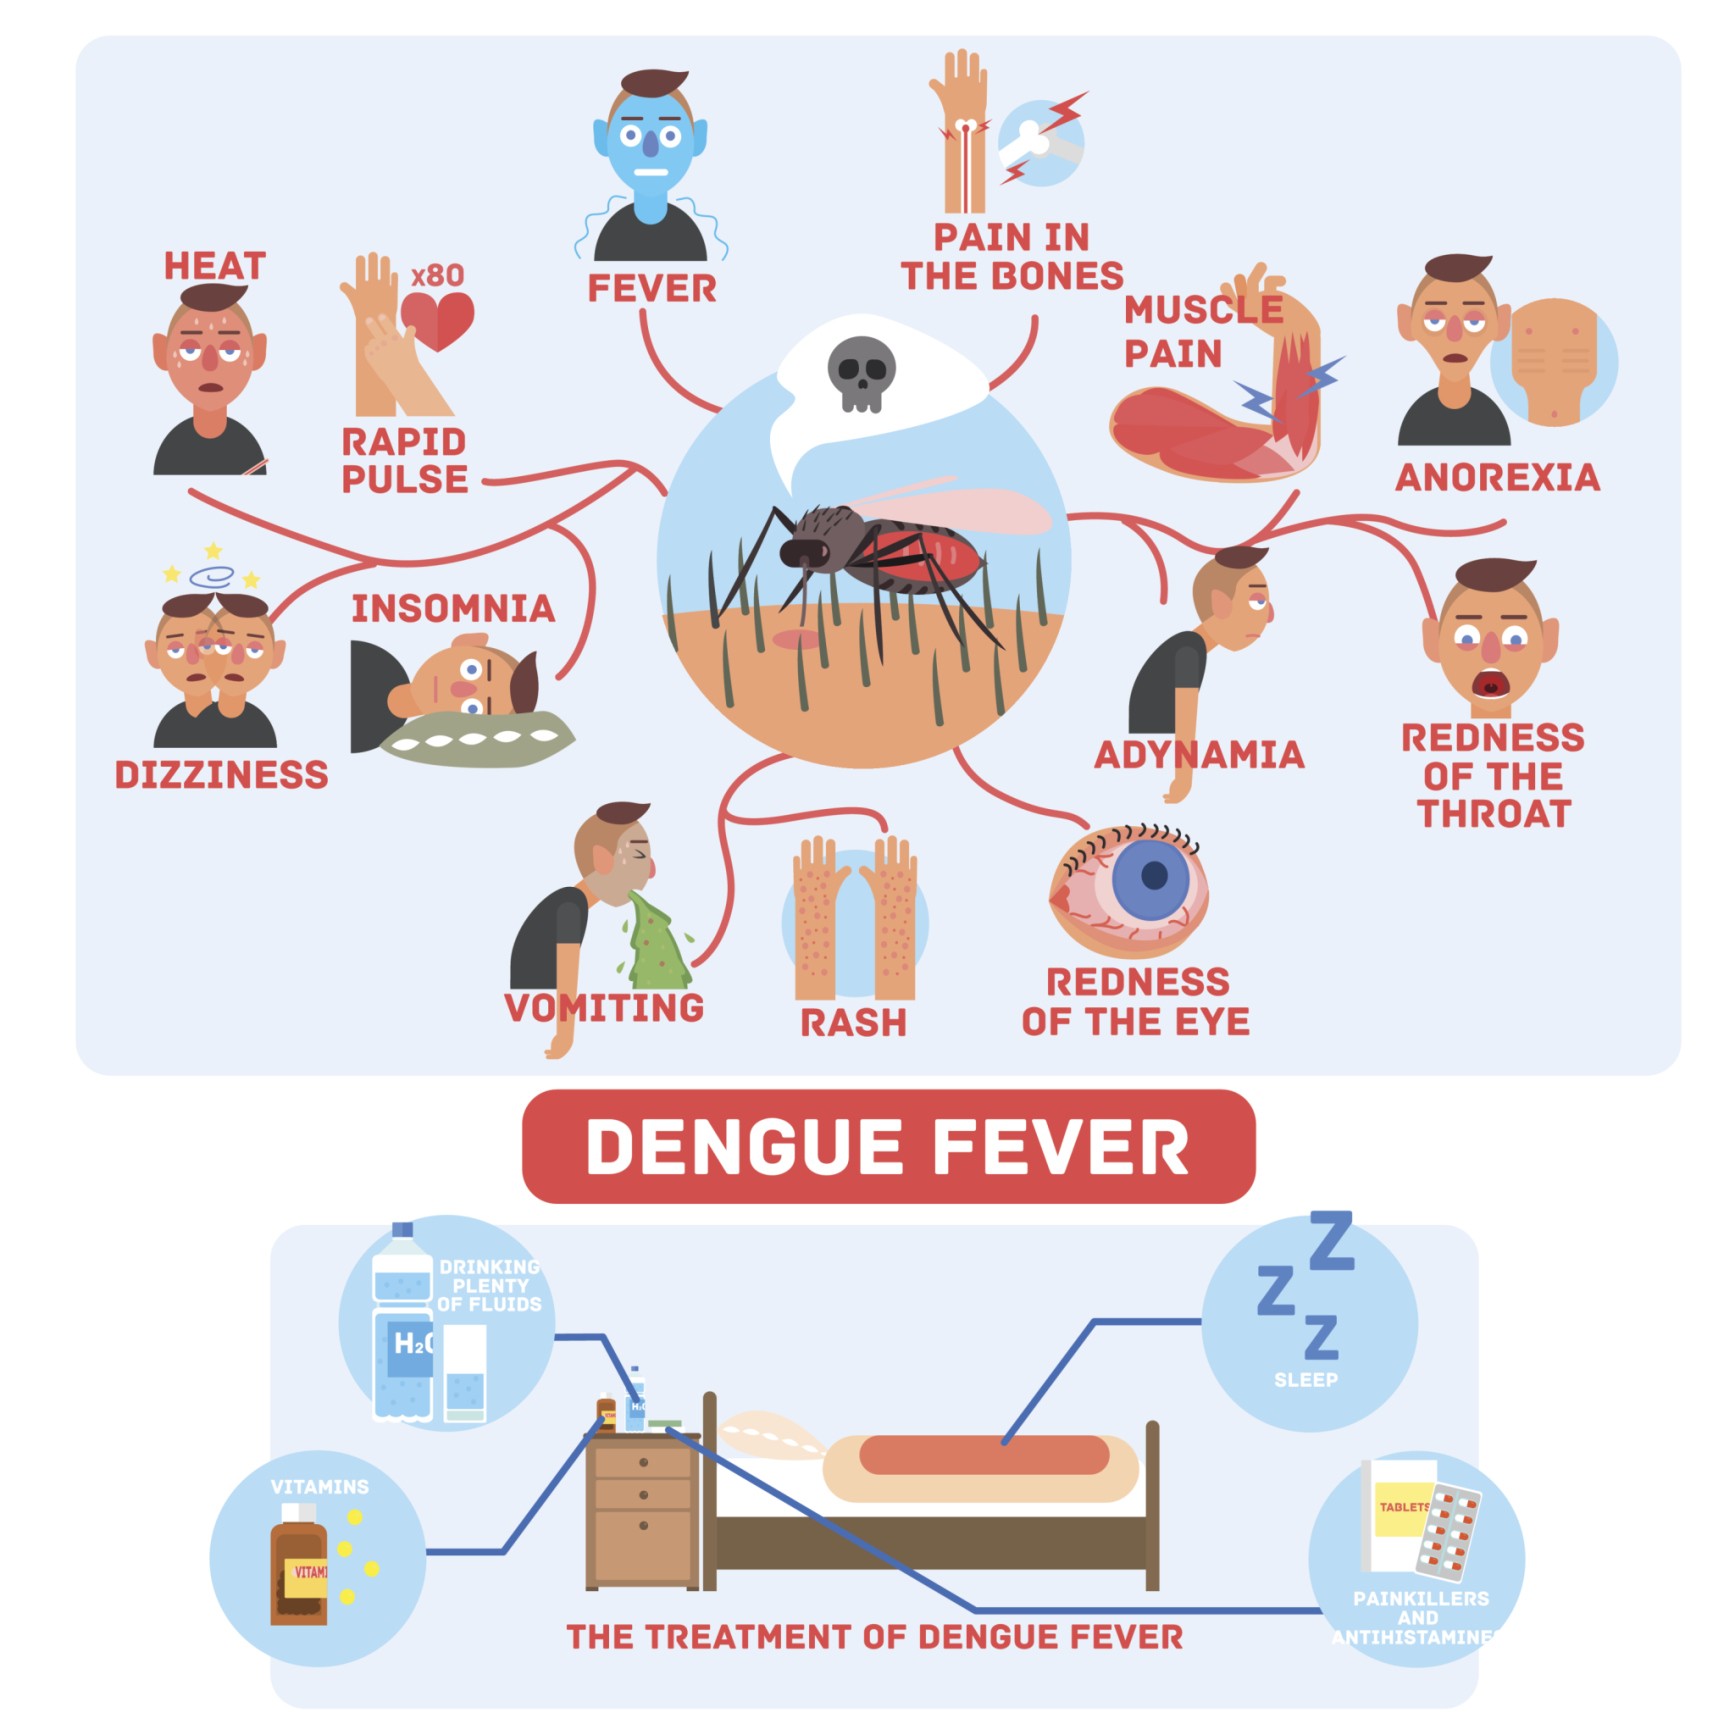 Das ist der Anfang vom Ende - Pagina 9 Dengue